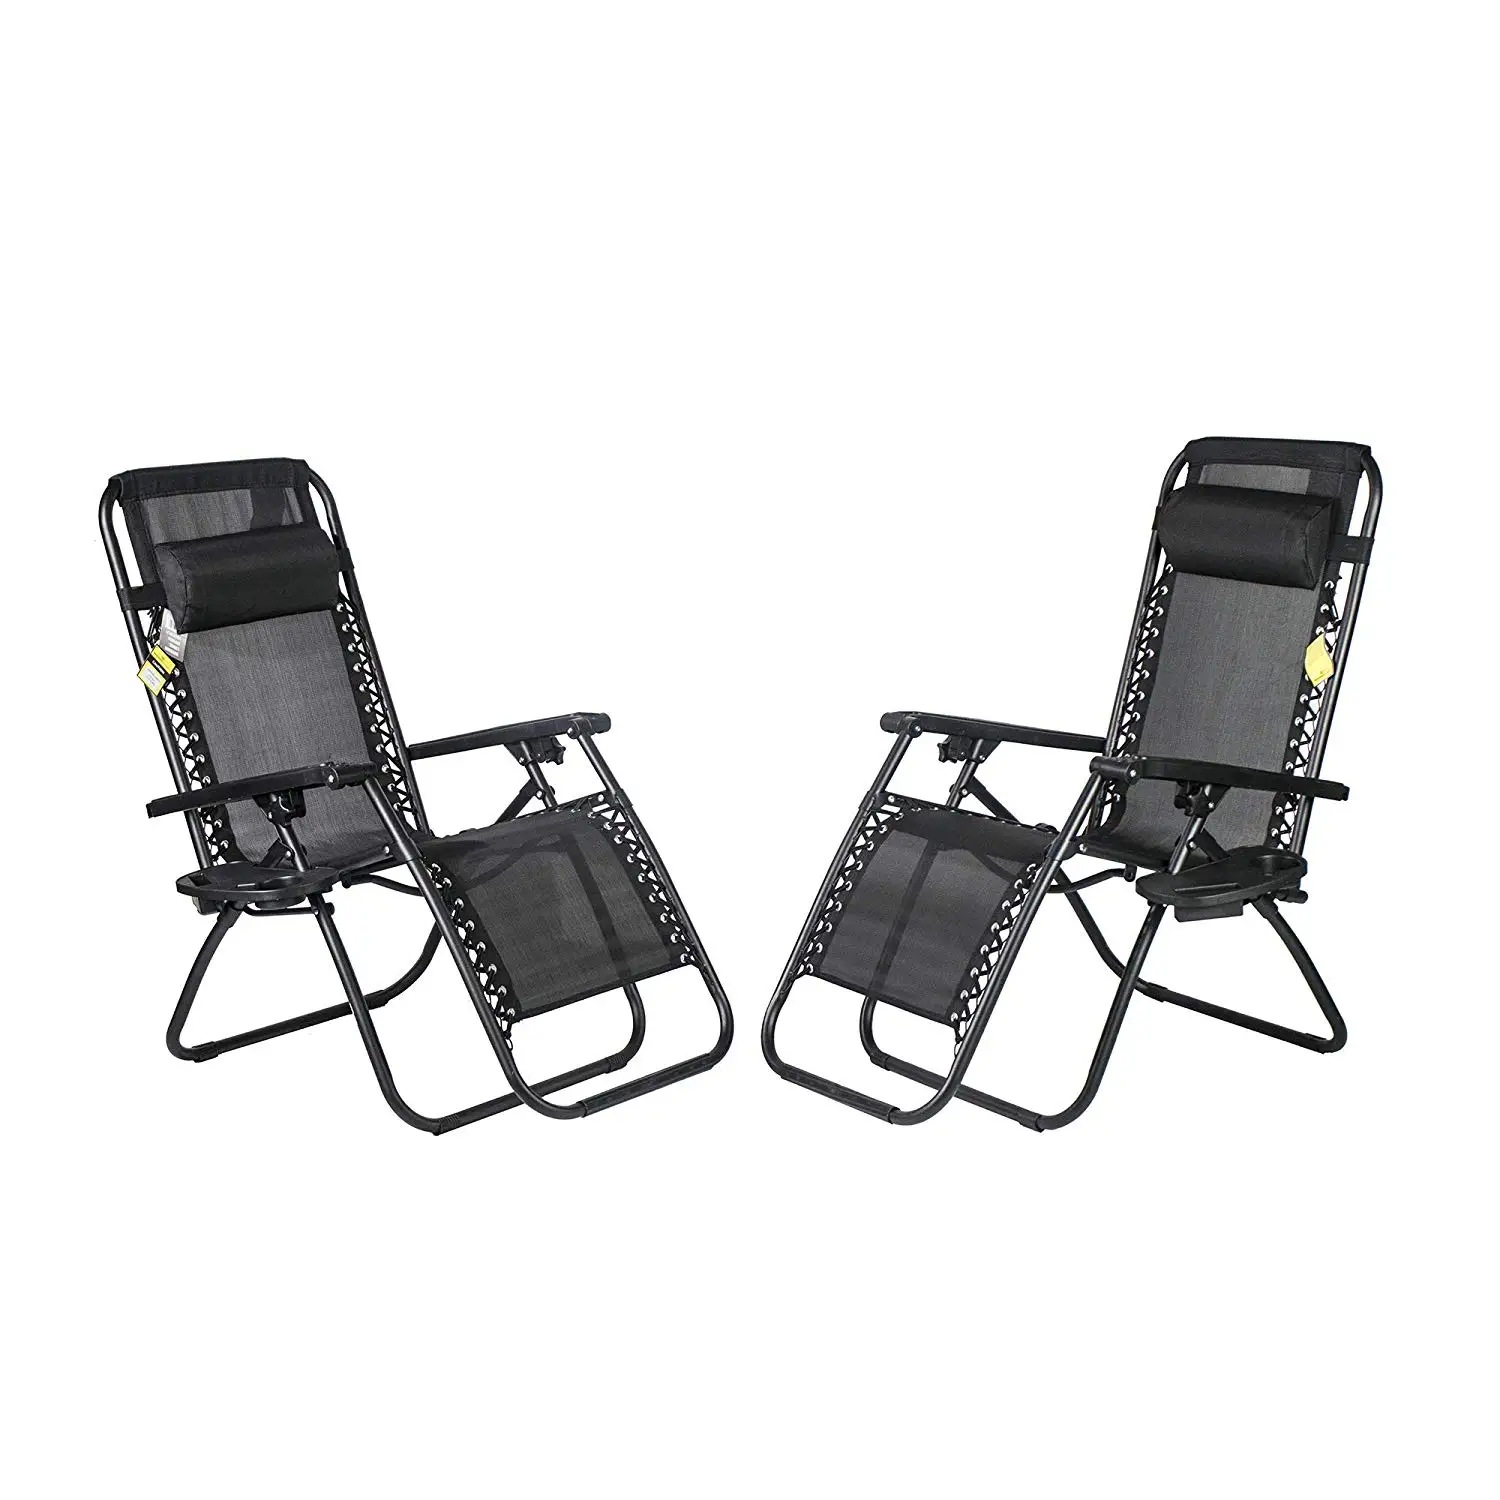 Buy Strathwood Basics Anti Gravity Adjustable Recliner Chair